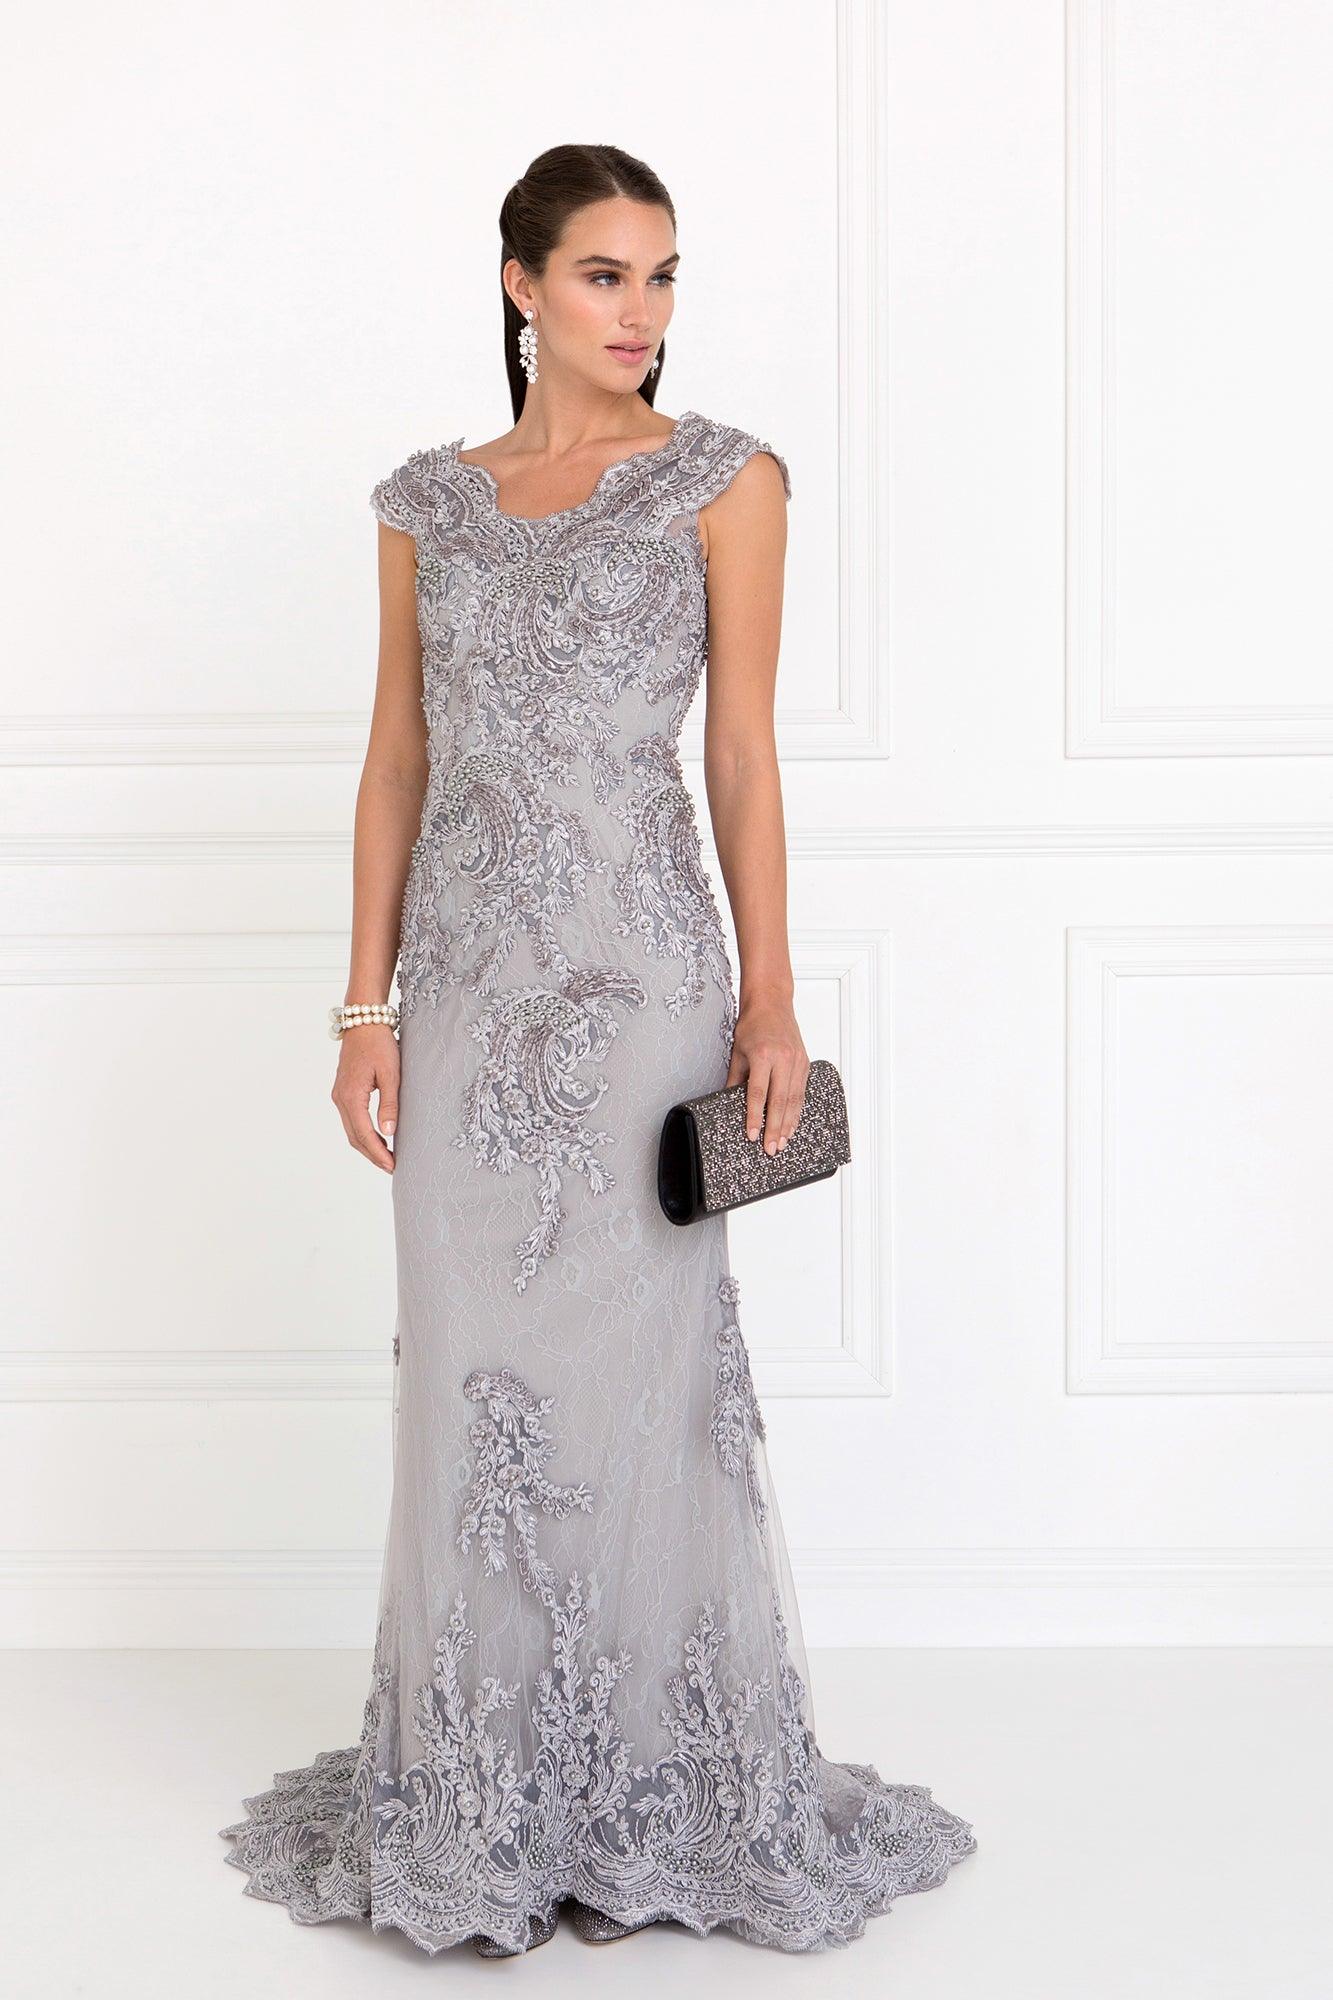 Lace Mermaid Long Prom Formal Dress - The Dress Outlet Elizabeth K